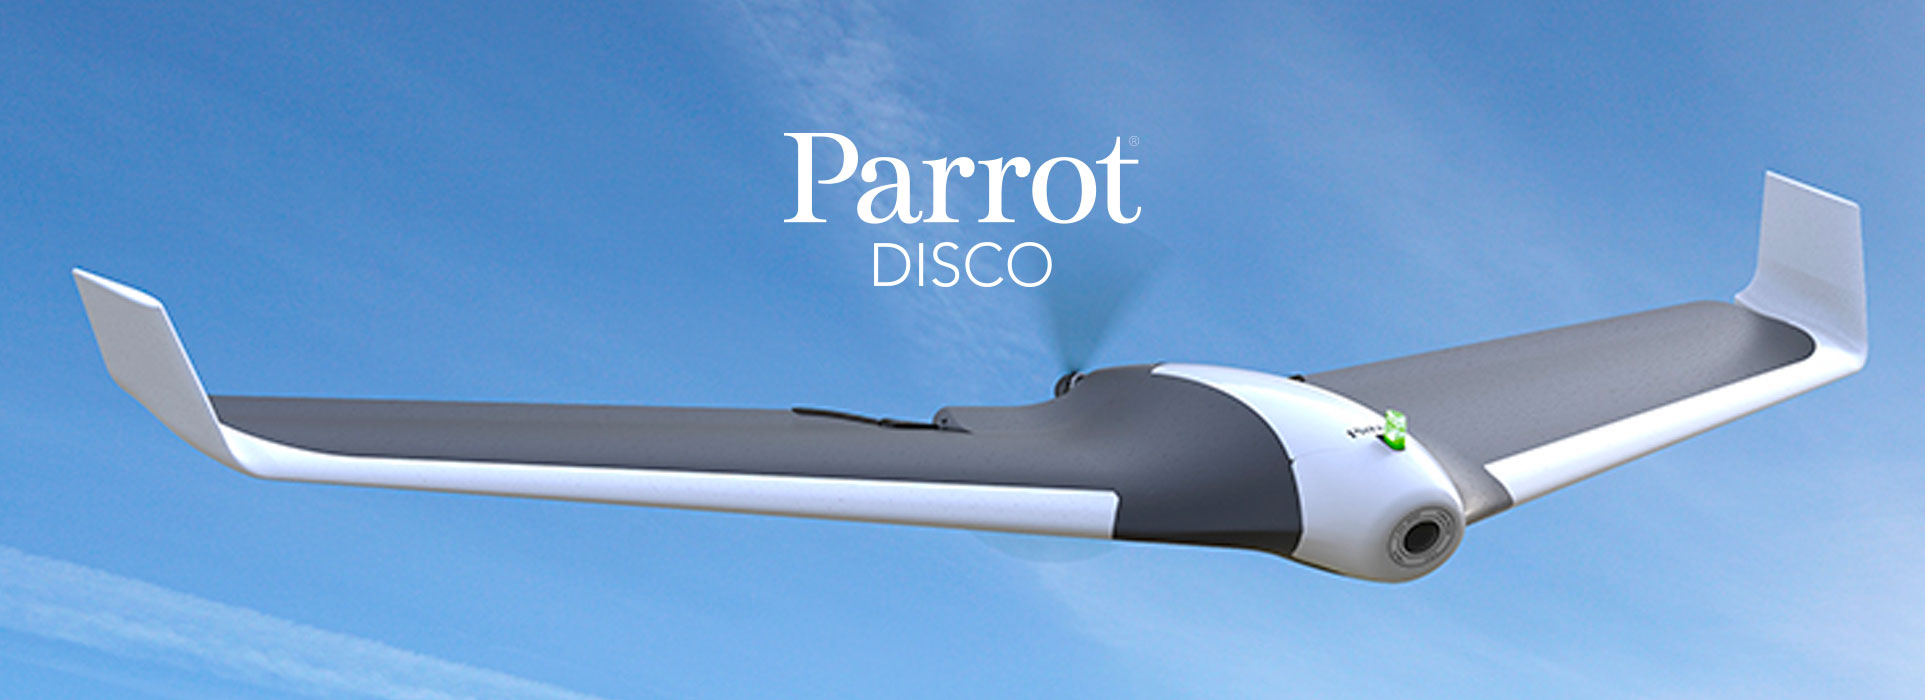 Parrot Disco